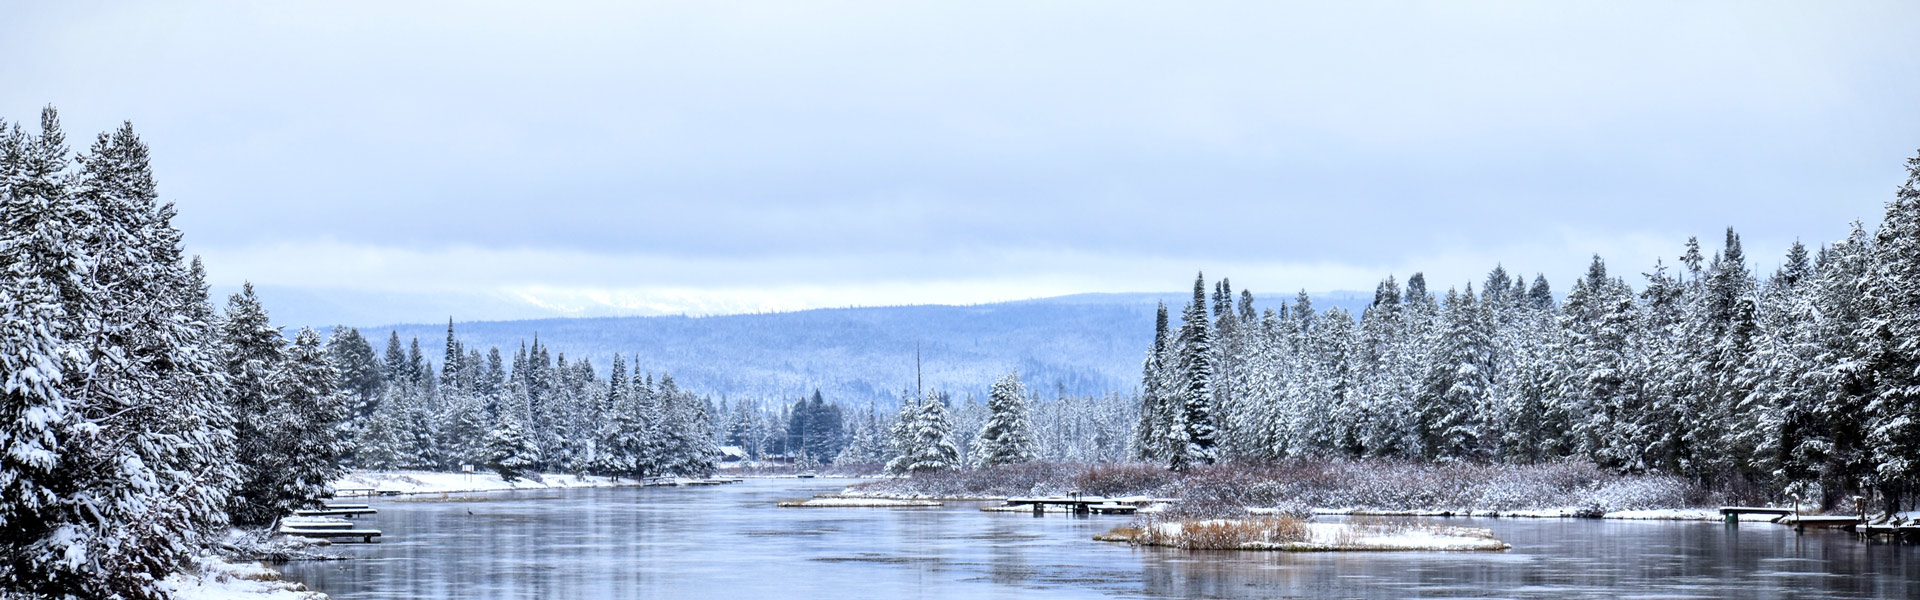 Winter river scene.